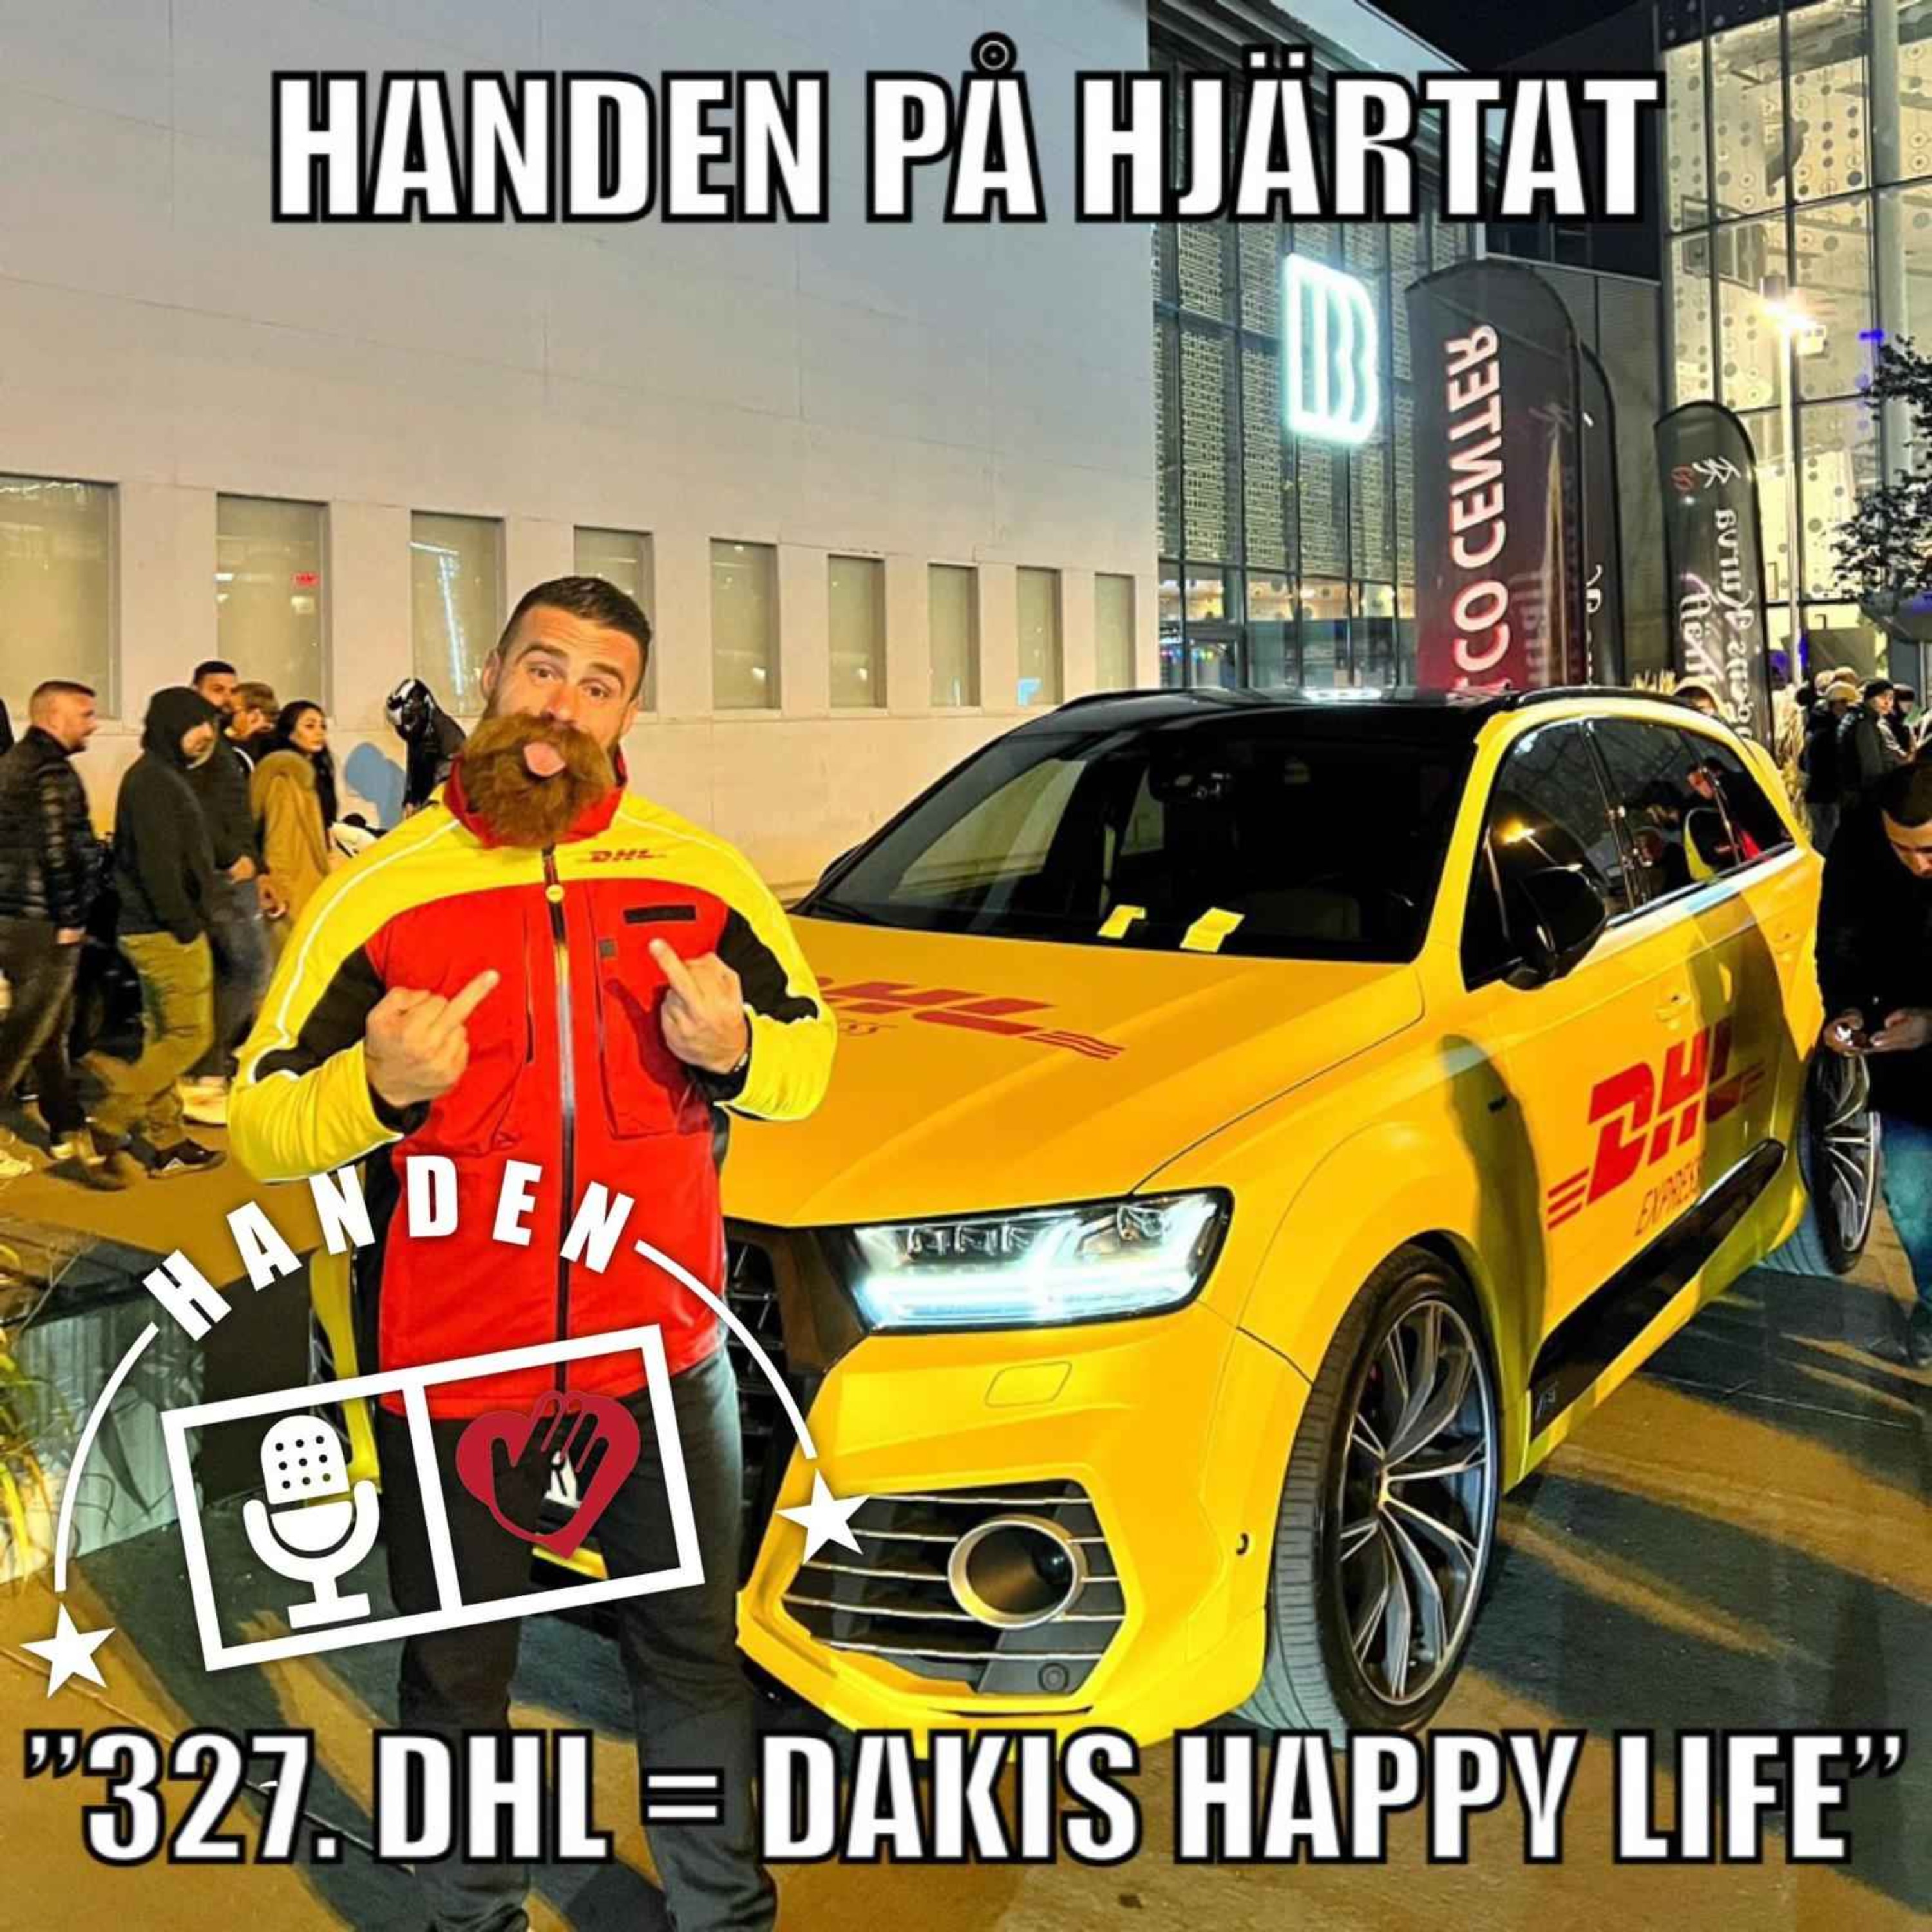 ”327. DHL = DAKIS HAPPY LIFE”